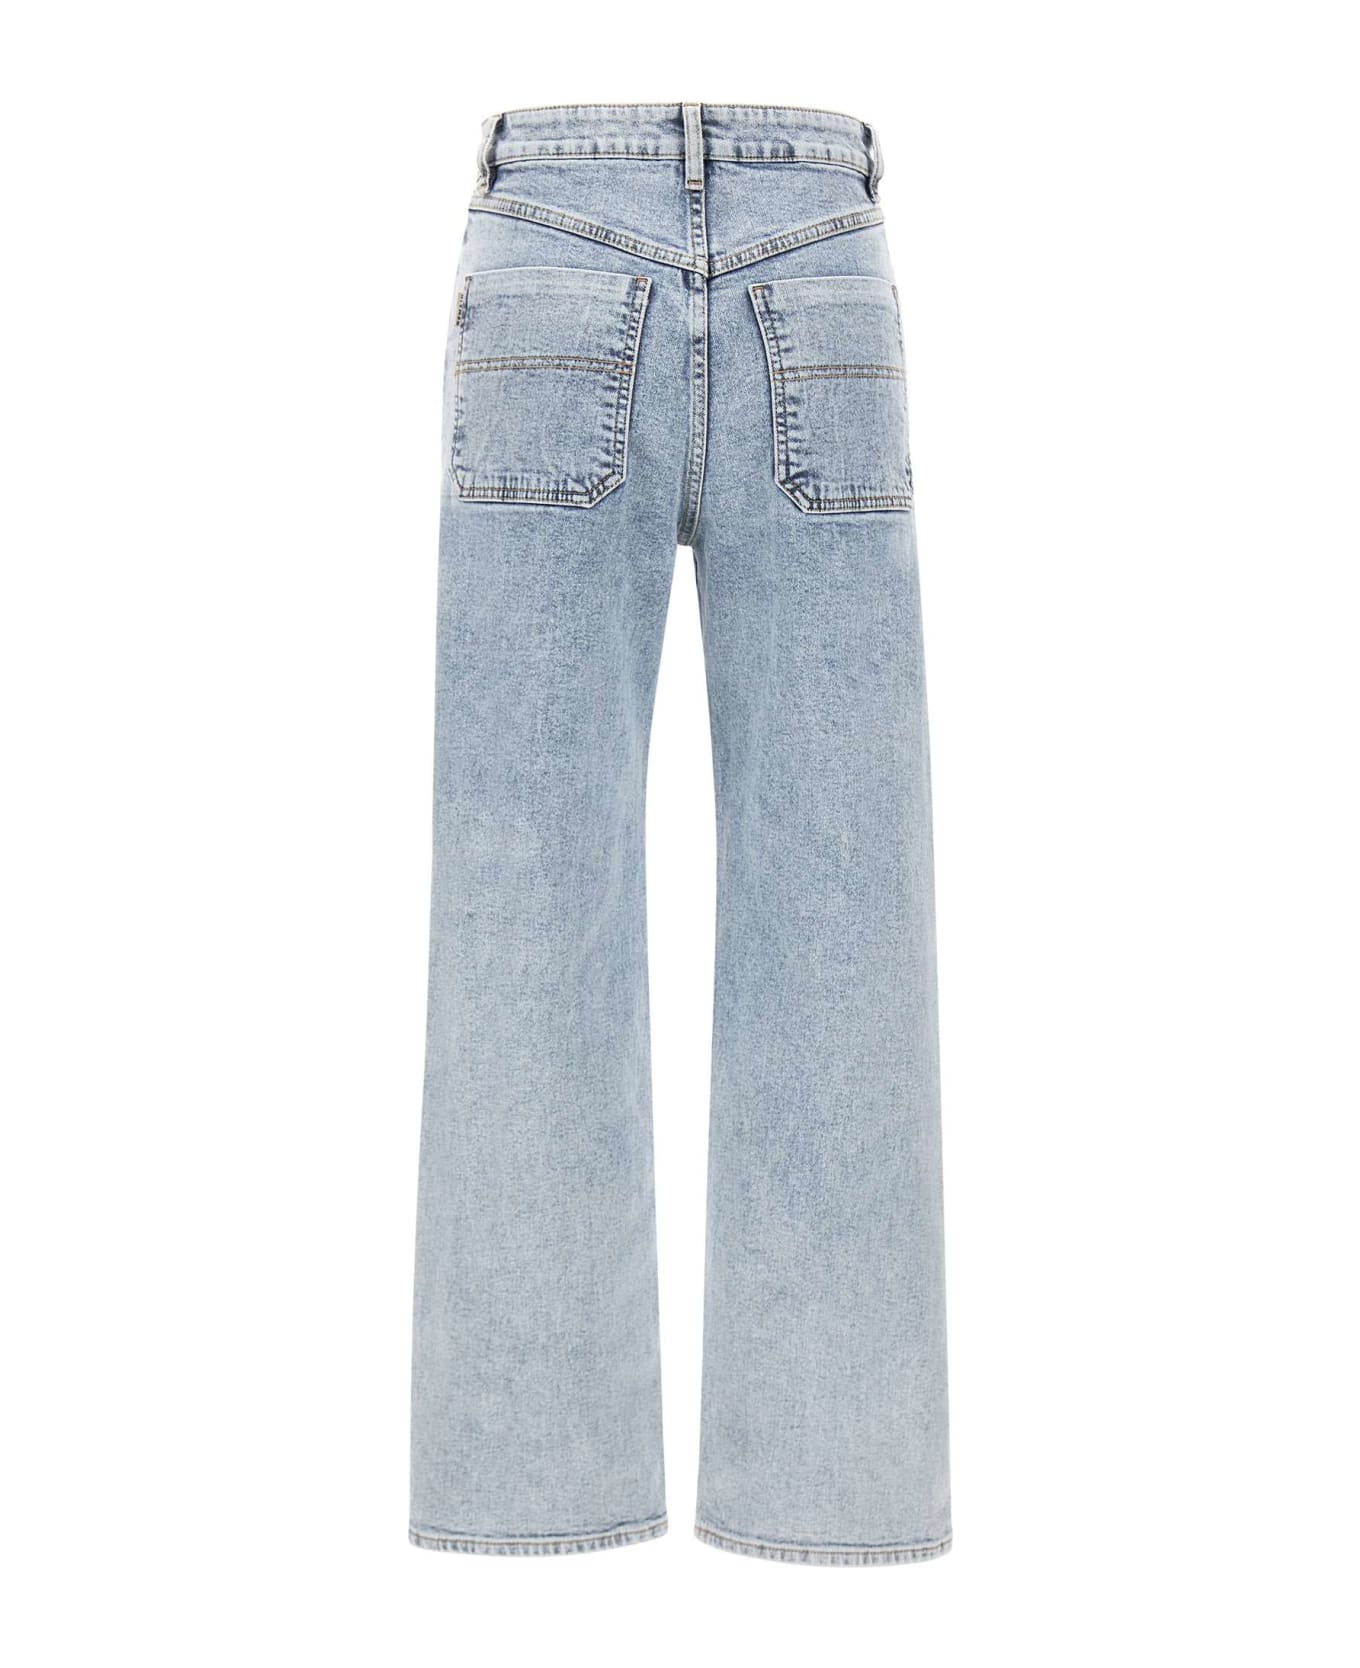 REMAIN Birger Christensen "high Wasted Denim Pants" Cotton Jeans - BLUE デニム